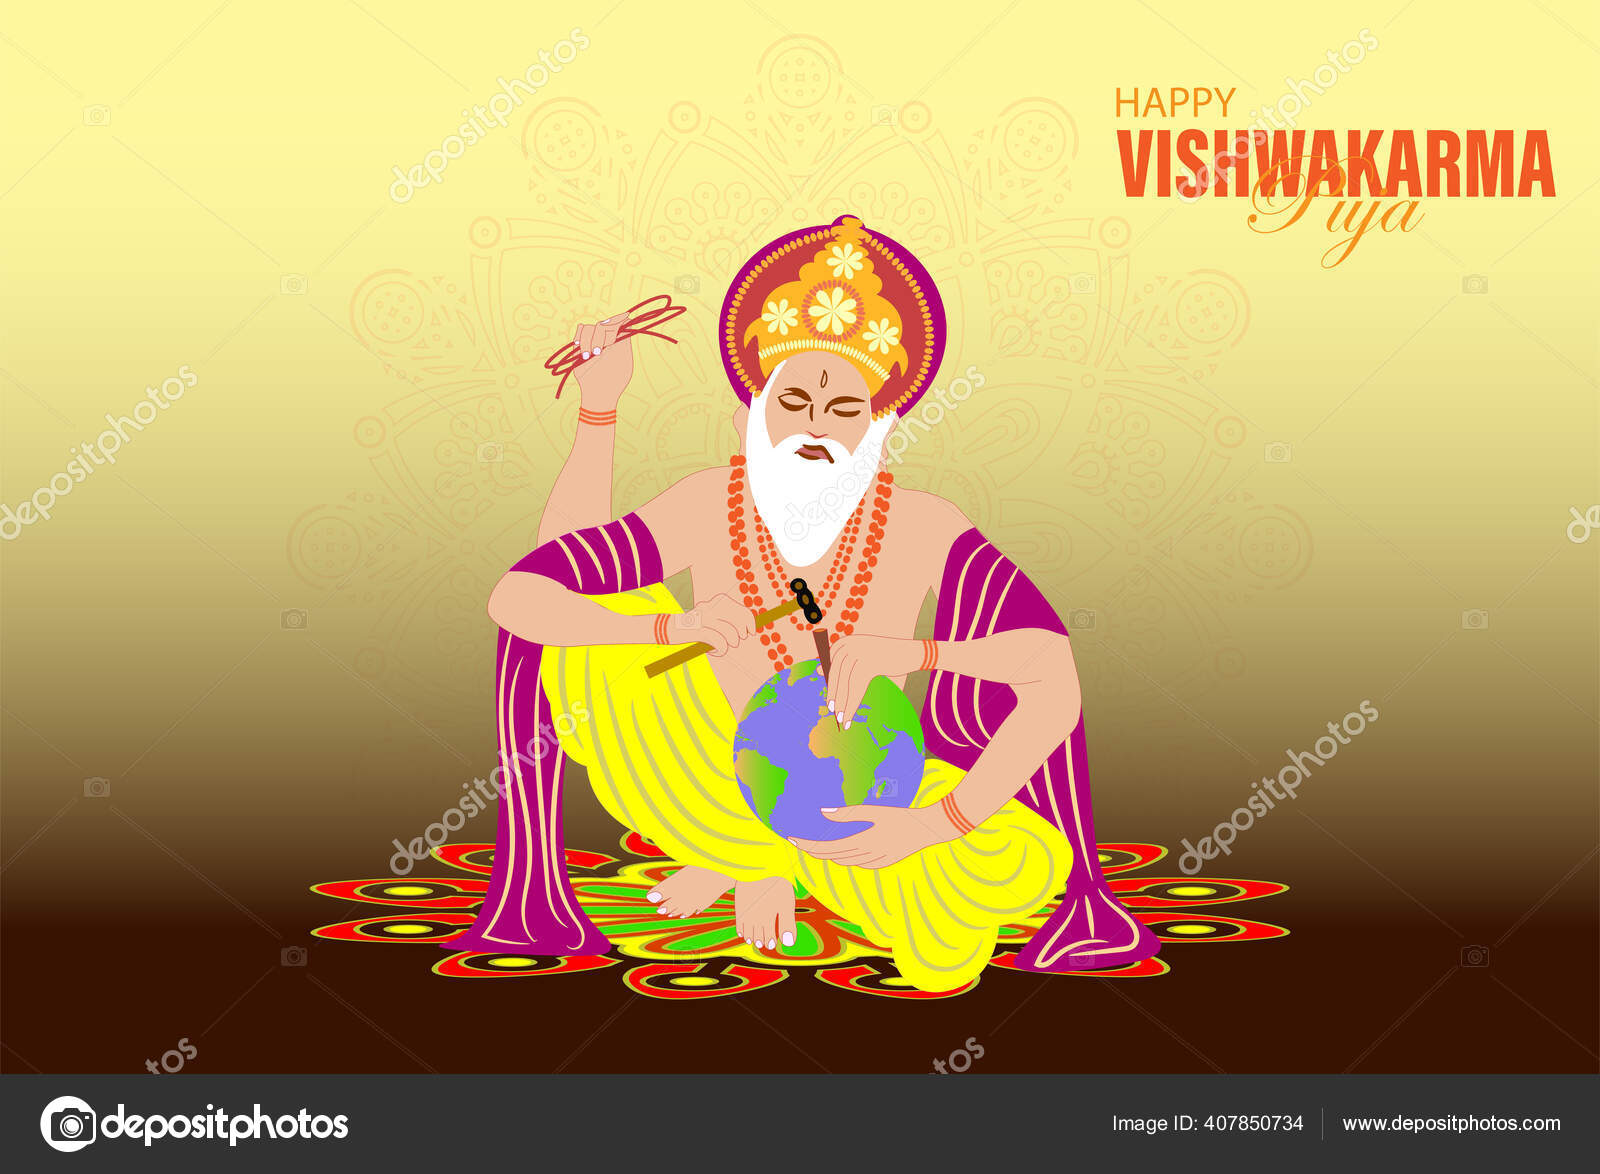 Dashavatar Vector Art Stock Images | Depositphotos